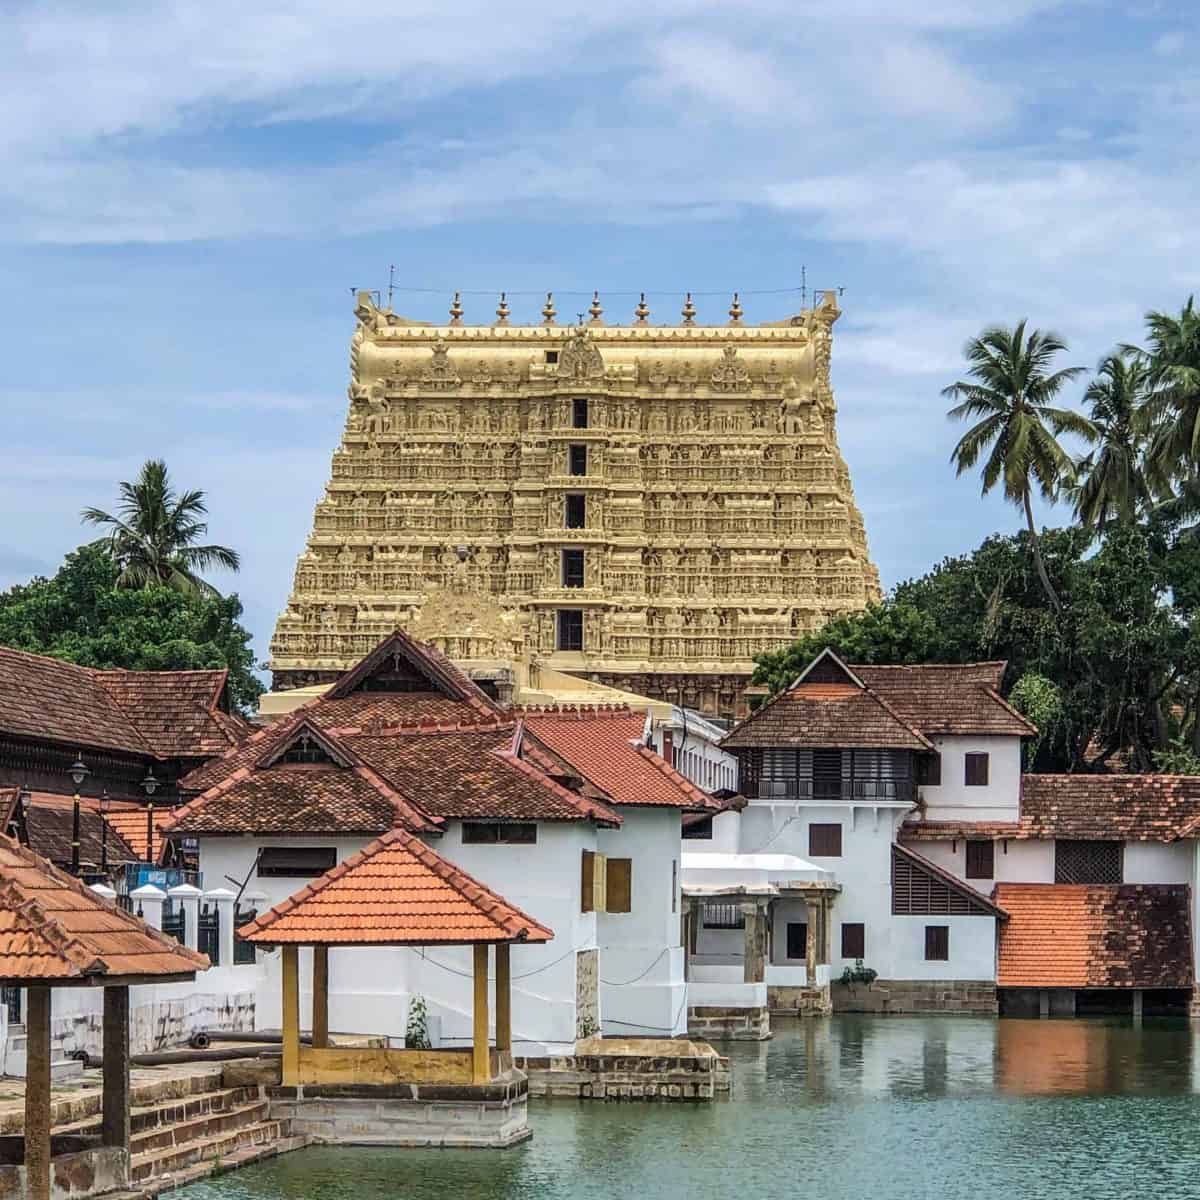 Padmanabhaswamy Temple | Blue Bird Travels